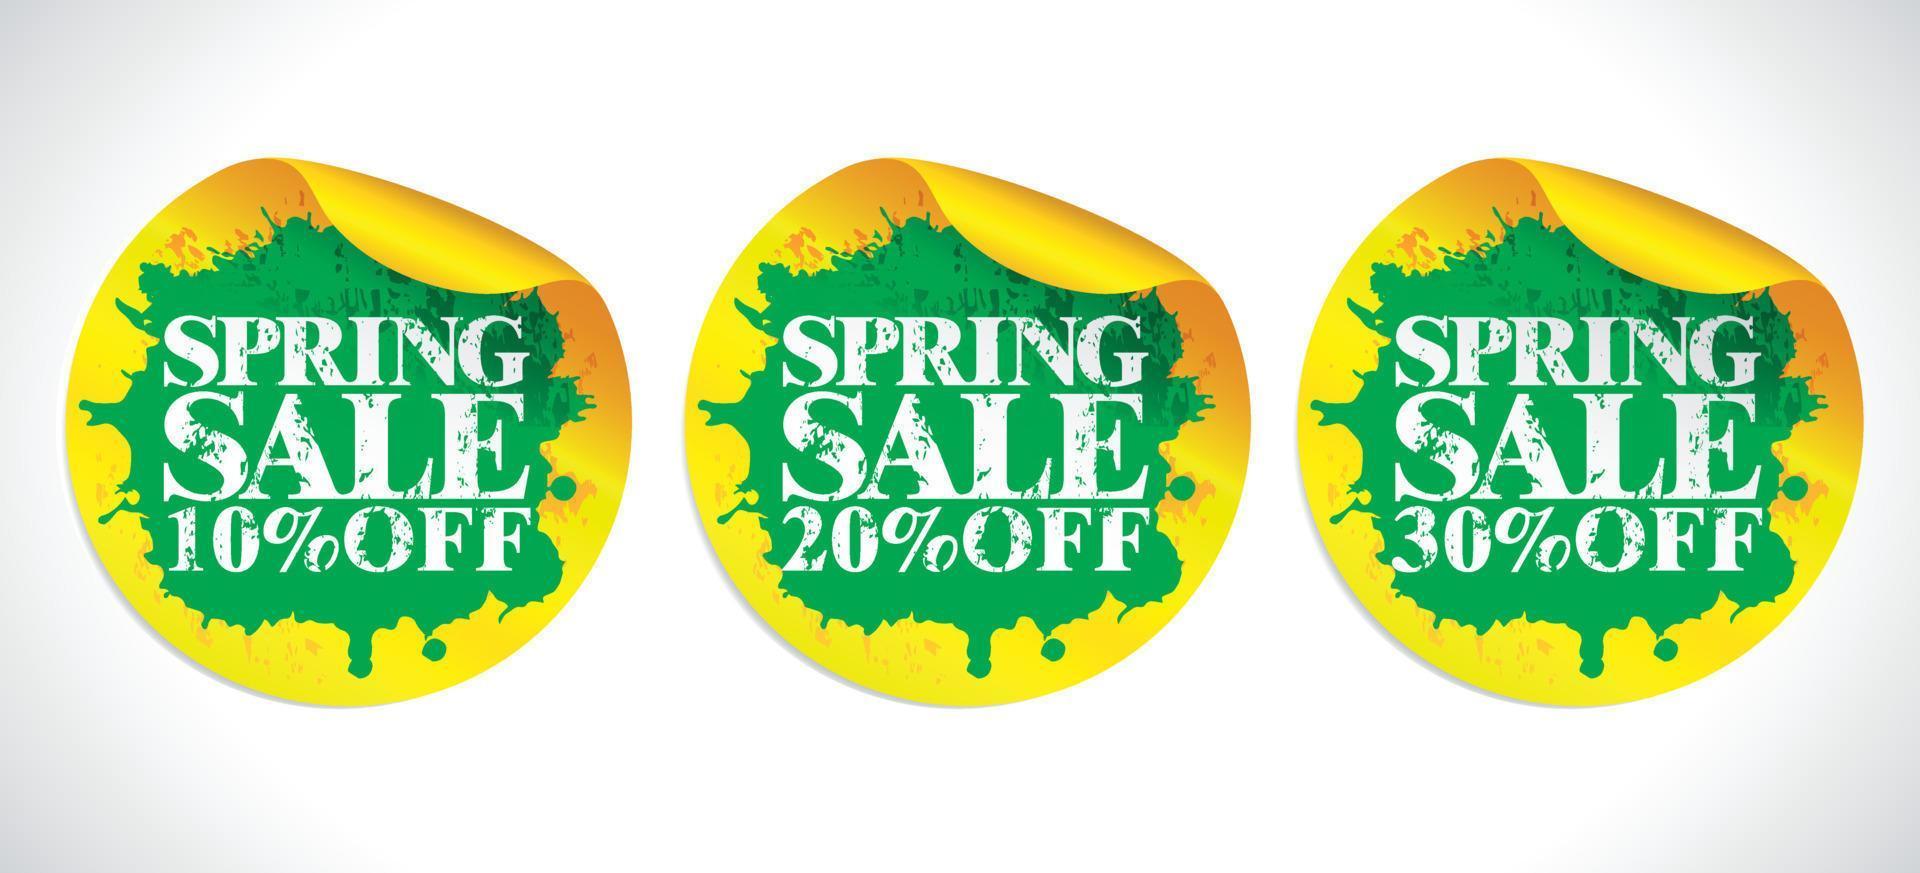 Spring sale stickers set. Grunge design concept style. Sale 10, 20, 30 percent off vector